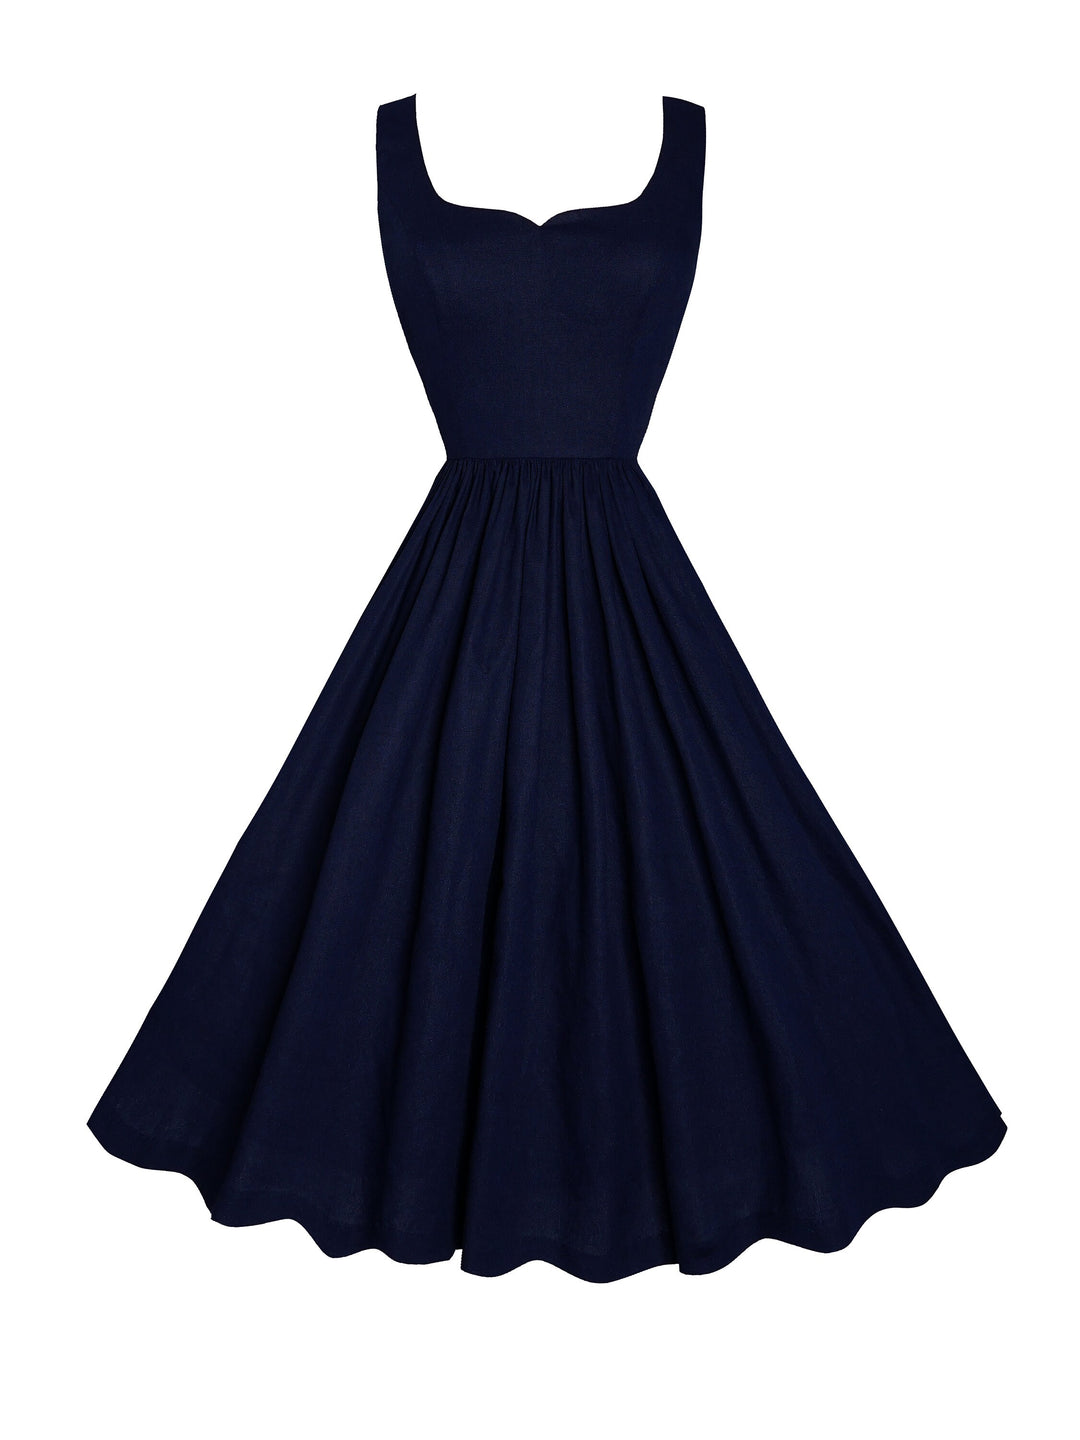 MTO - Elizabeth Dress in Indigo Blue Linen